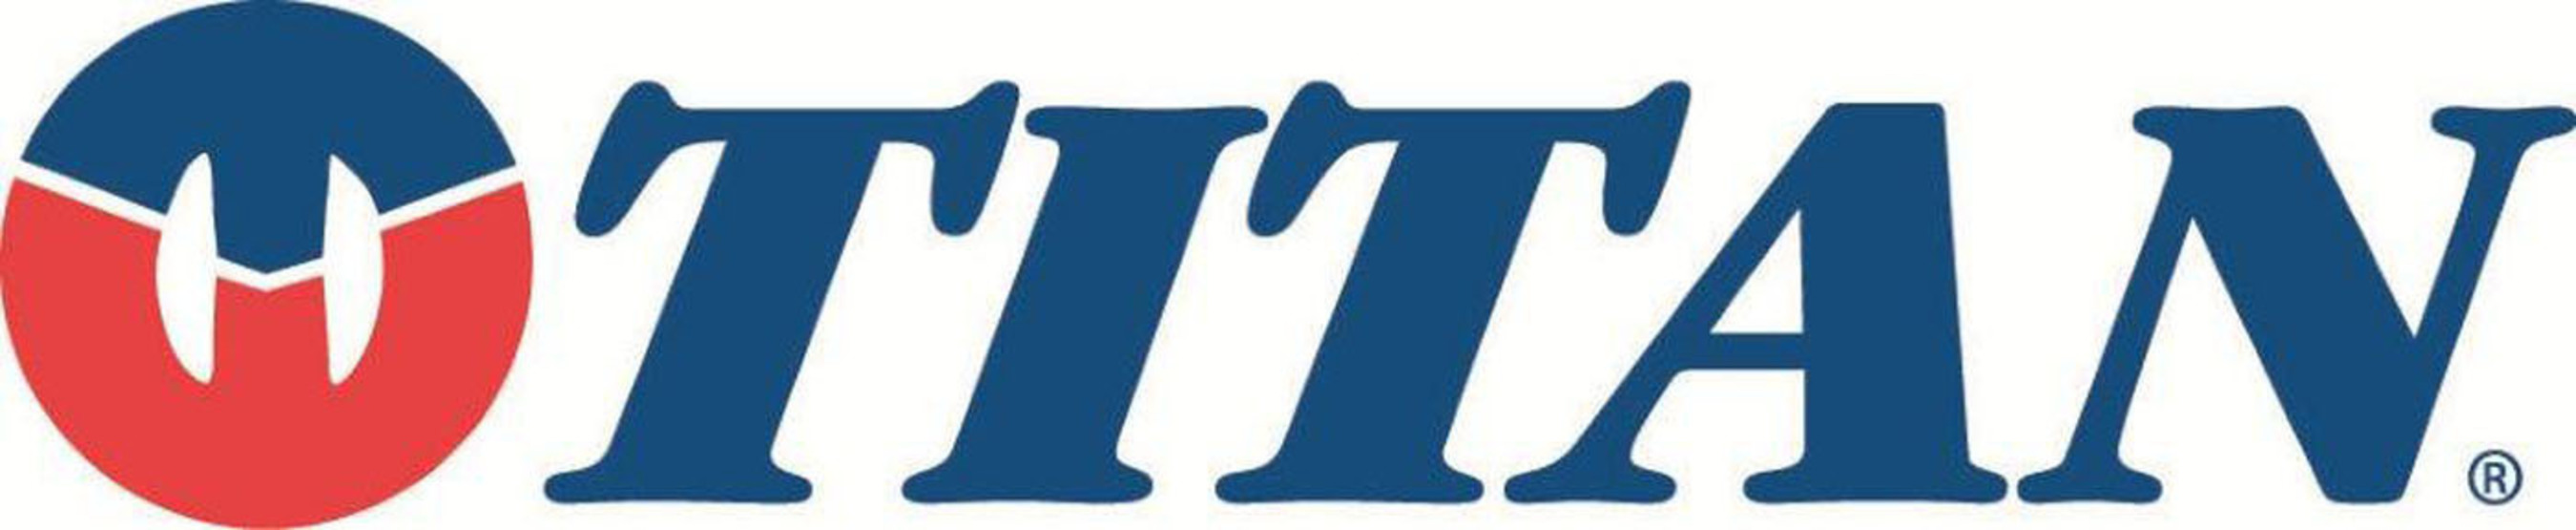 Titan International, Inc. logo. (PRNewsFoto/Titan International) (PRNewsFoto/TITAN INTERNATIONAL)